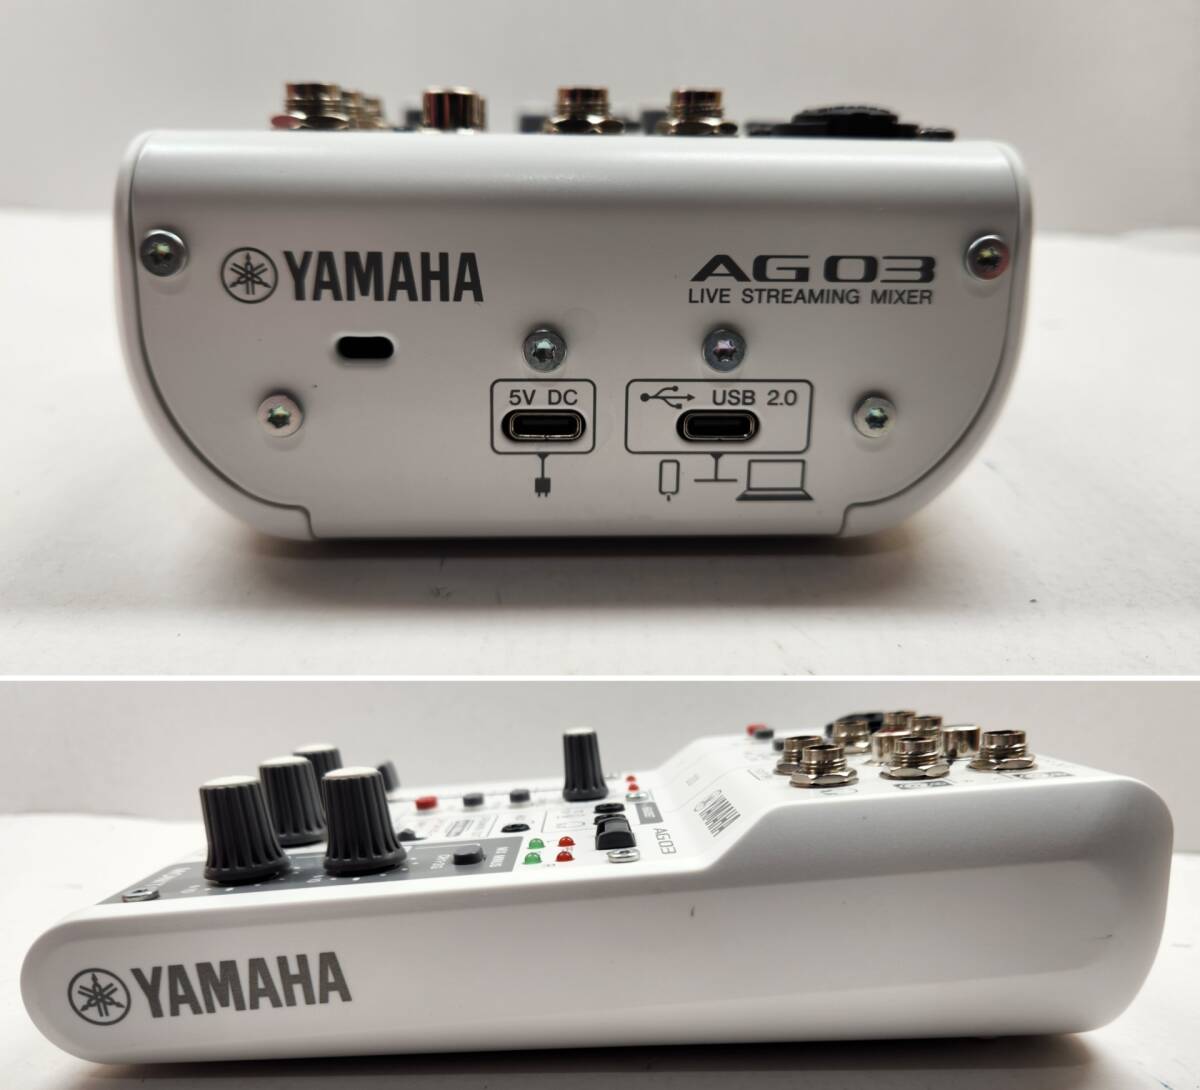 【9898】YAMAHA AG 03 MK2 オーディオインターフェース ミキサー DTM ライブストリーミングミキサー ホワイト 通電、接続のみ確認 中古品 _画像8